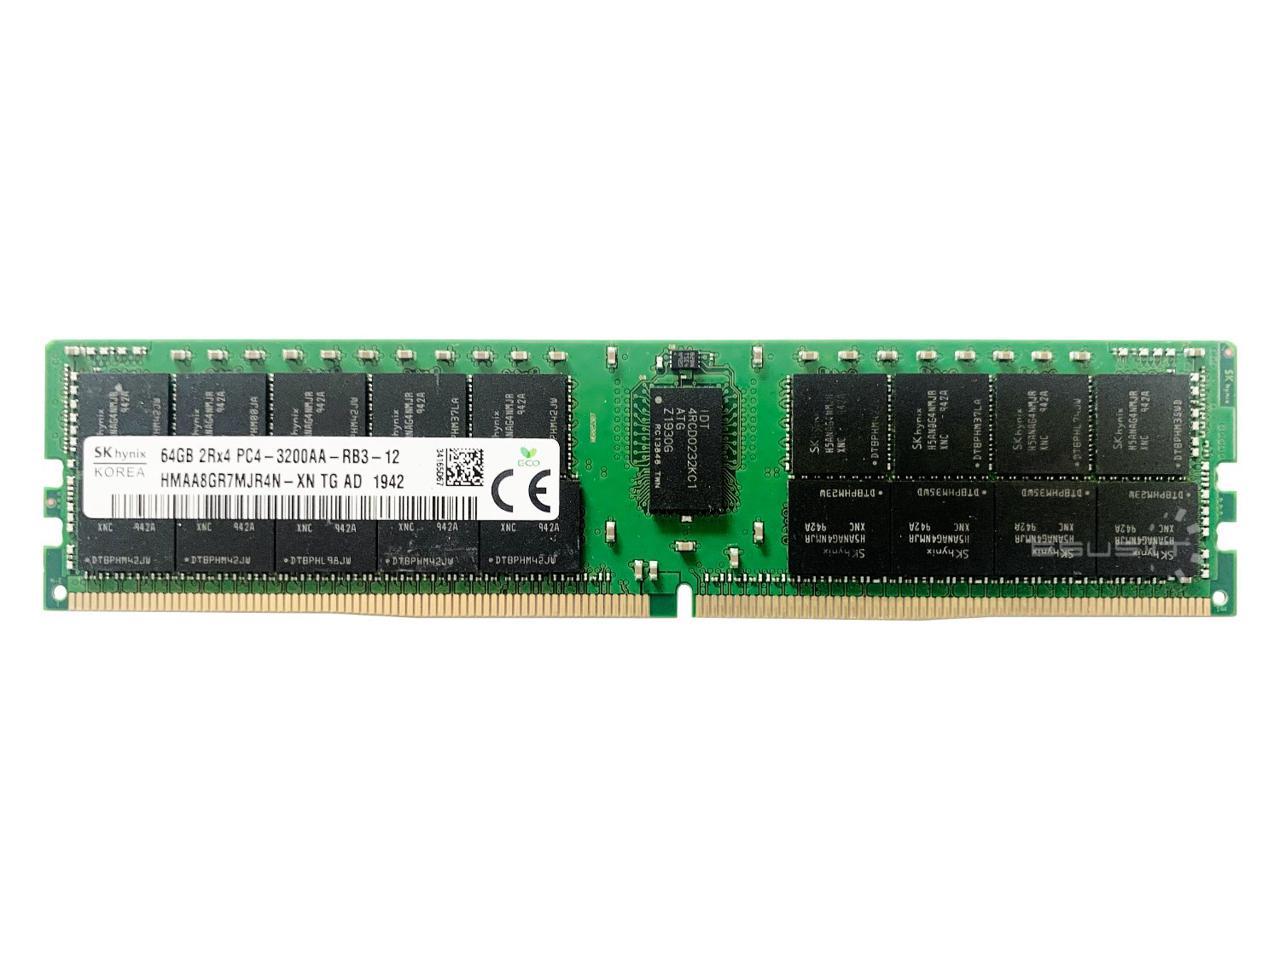 Hynix HMAA8GR7MJR4N-XN 64GB DDR4-3200 PC4-25600 ECC Registered RDIMM